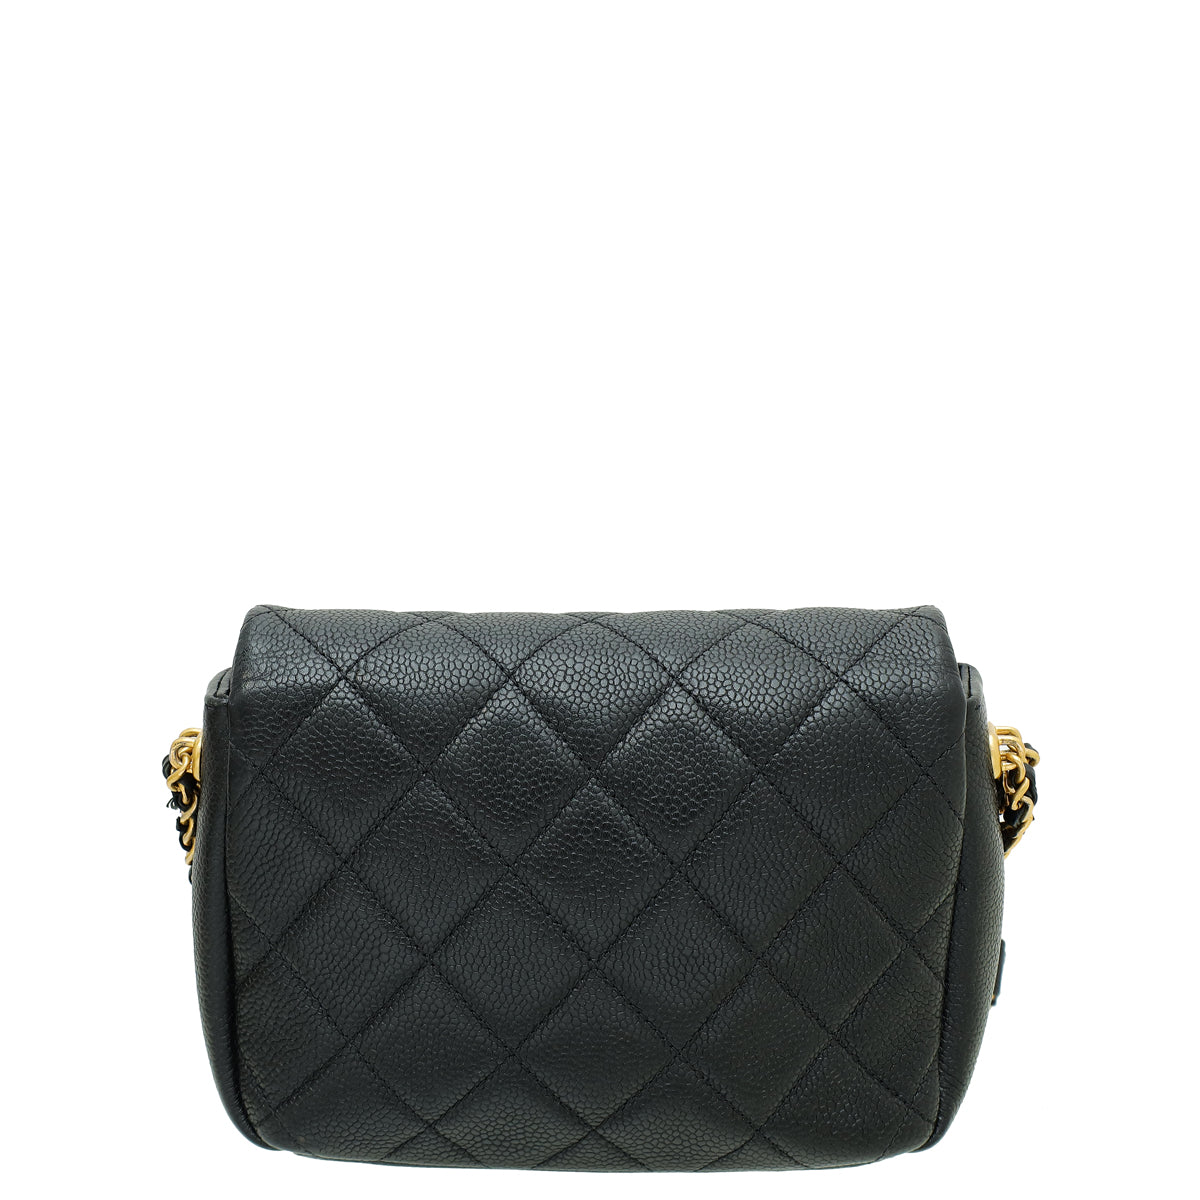 Chanel Black CC Medallion Mini Flap Bag